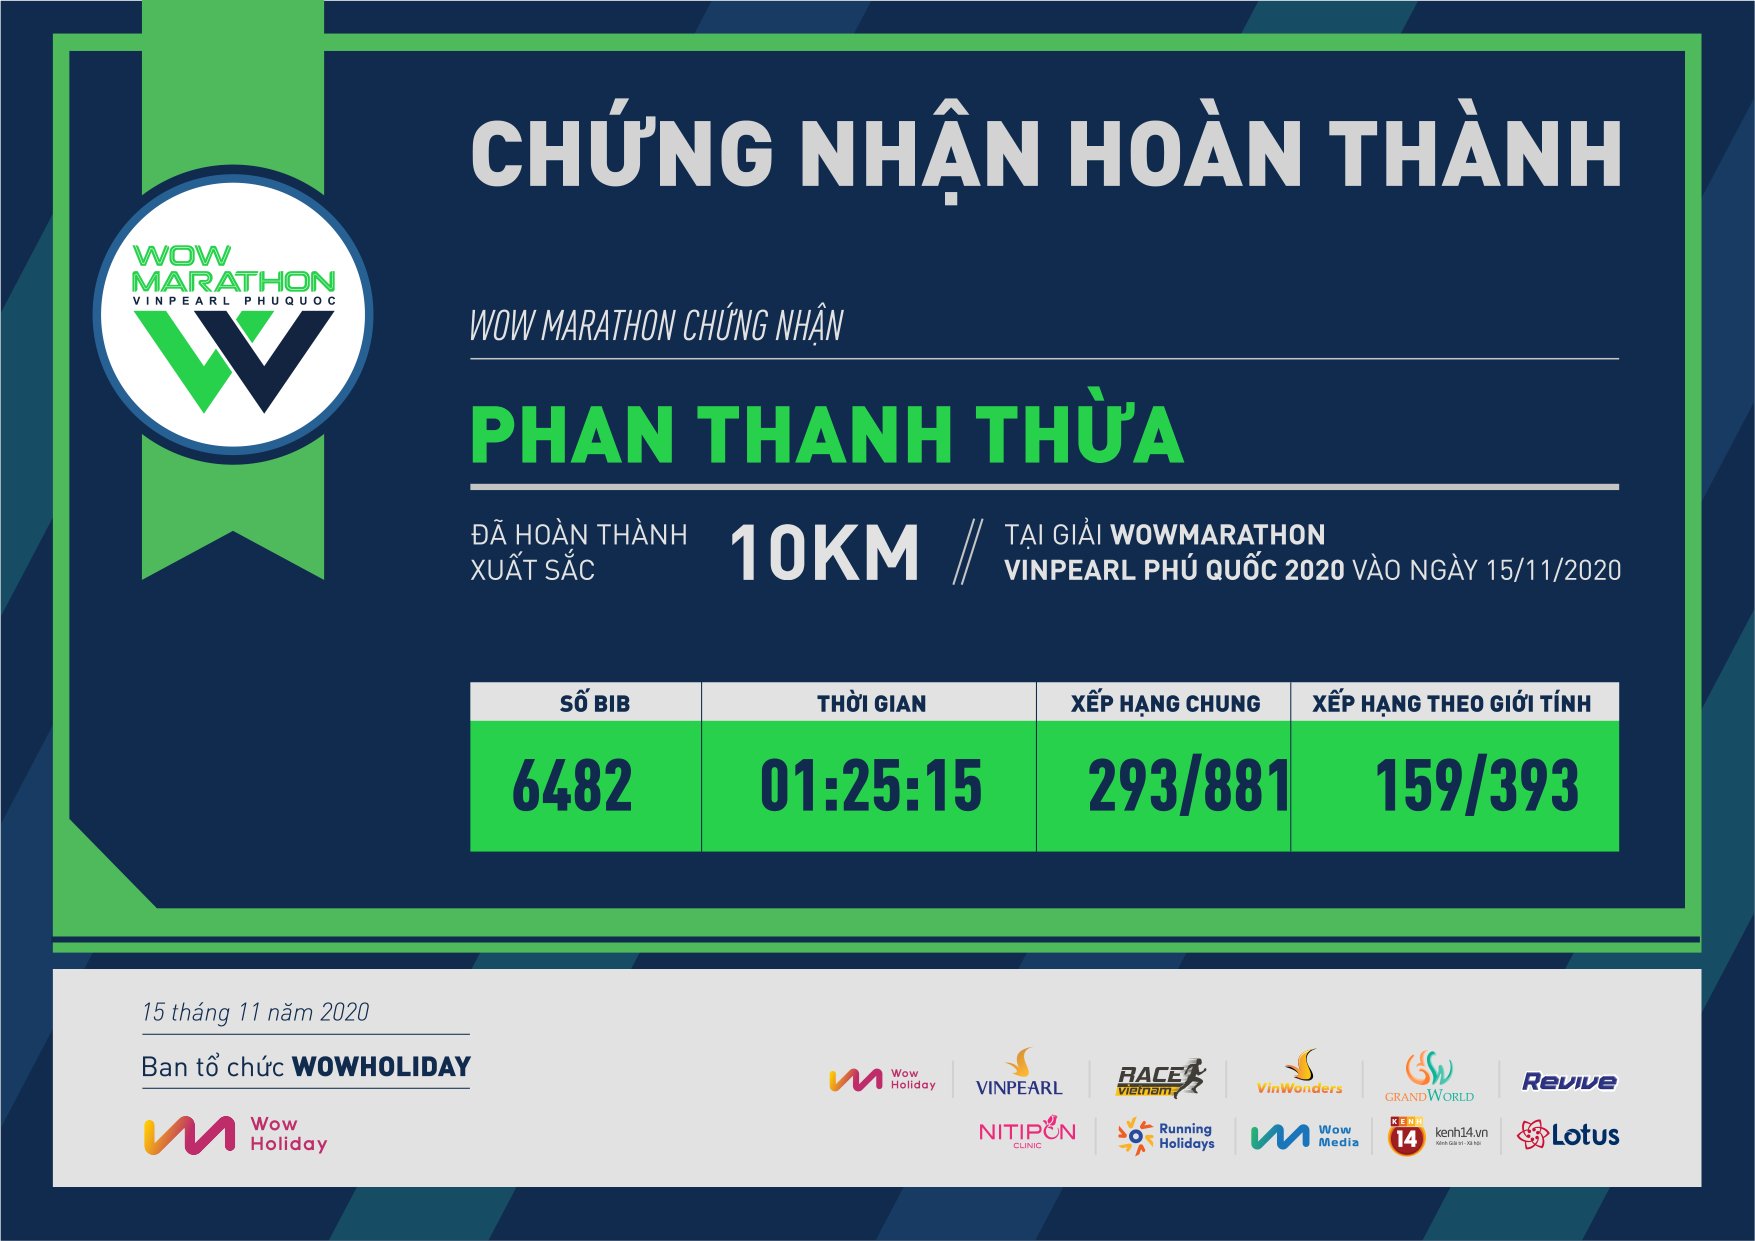 6482 - PHAN THANH THỪA